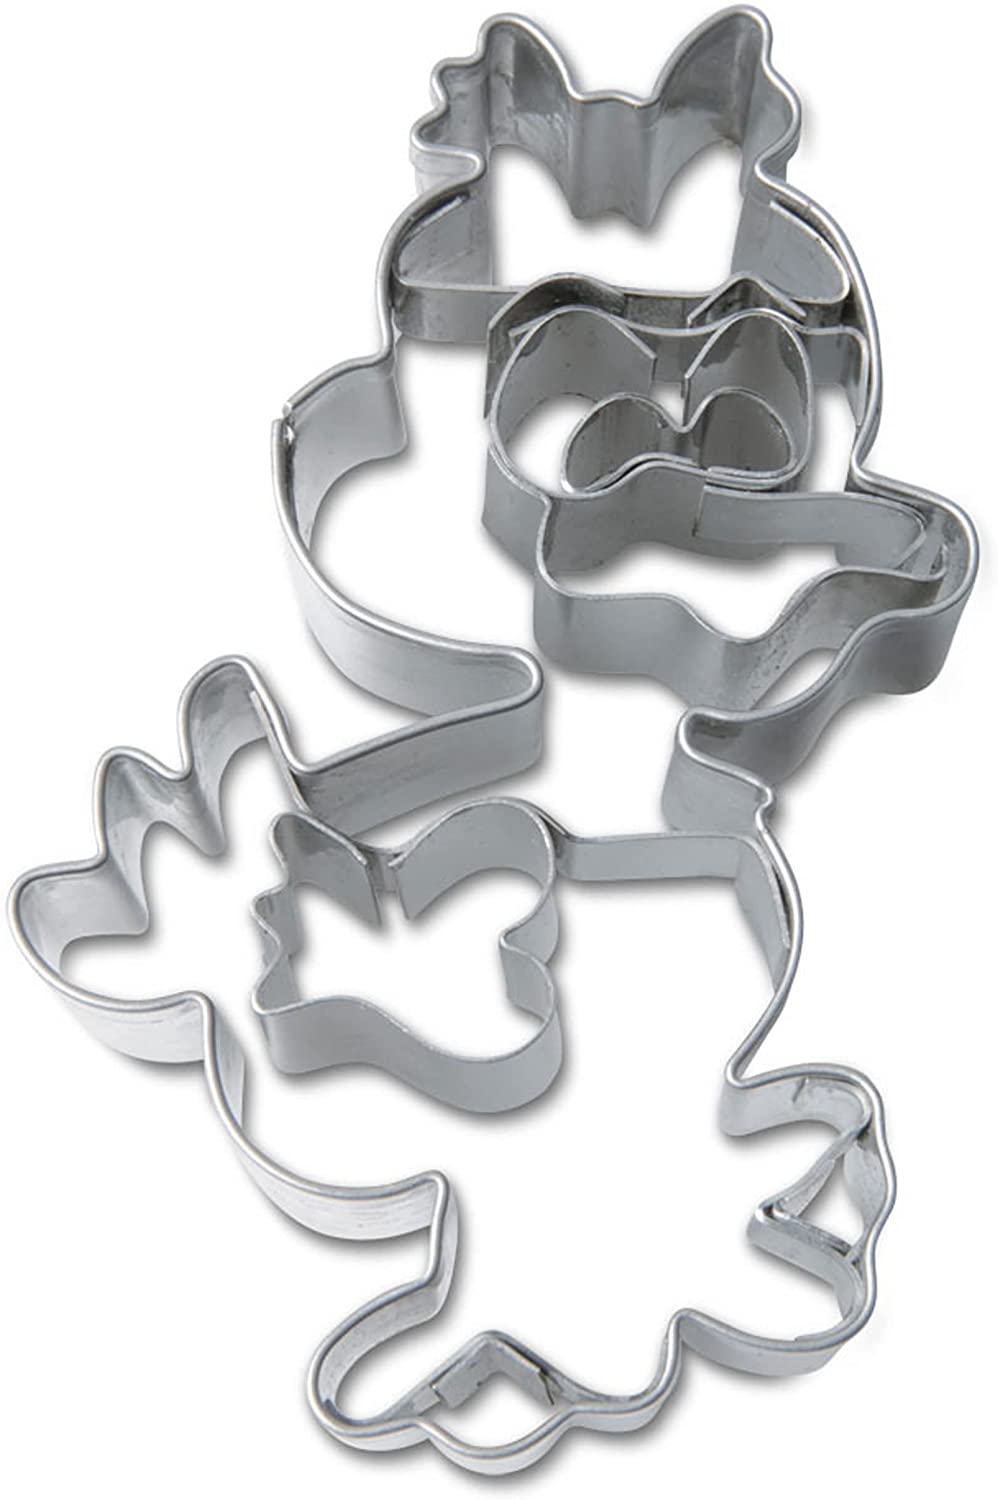 Städter Cookie cutter, stainless steel, silver, 7.5 cm